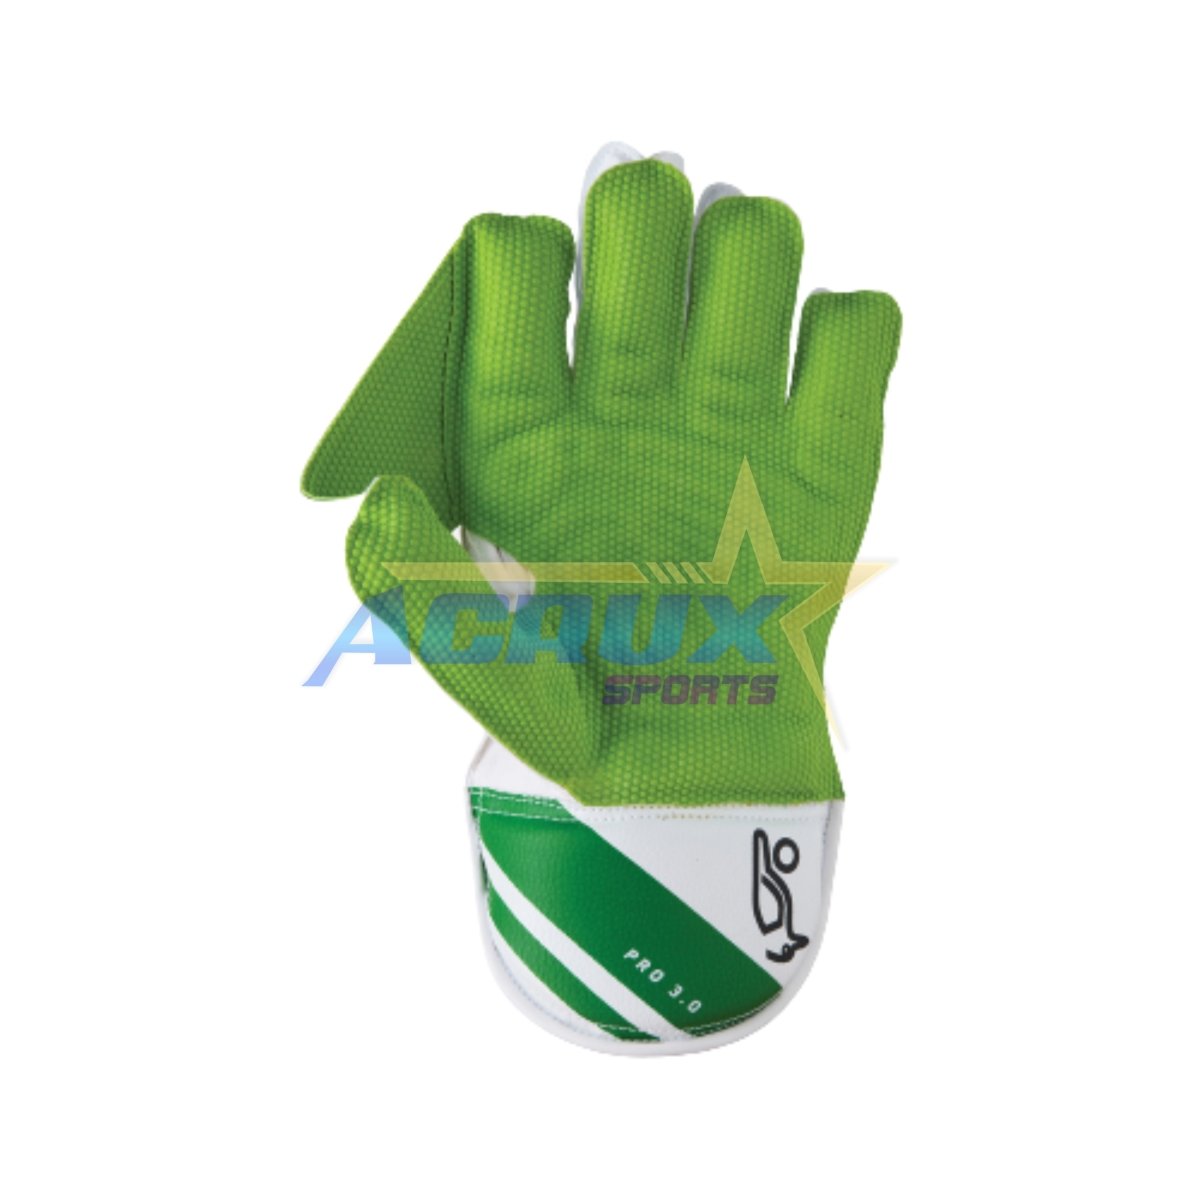 Kookaburra Kahuna Pro 3.0 Cricket Wicket Keeping Gloves